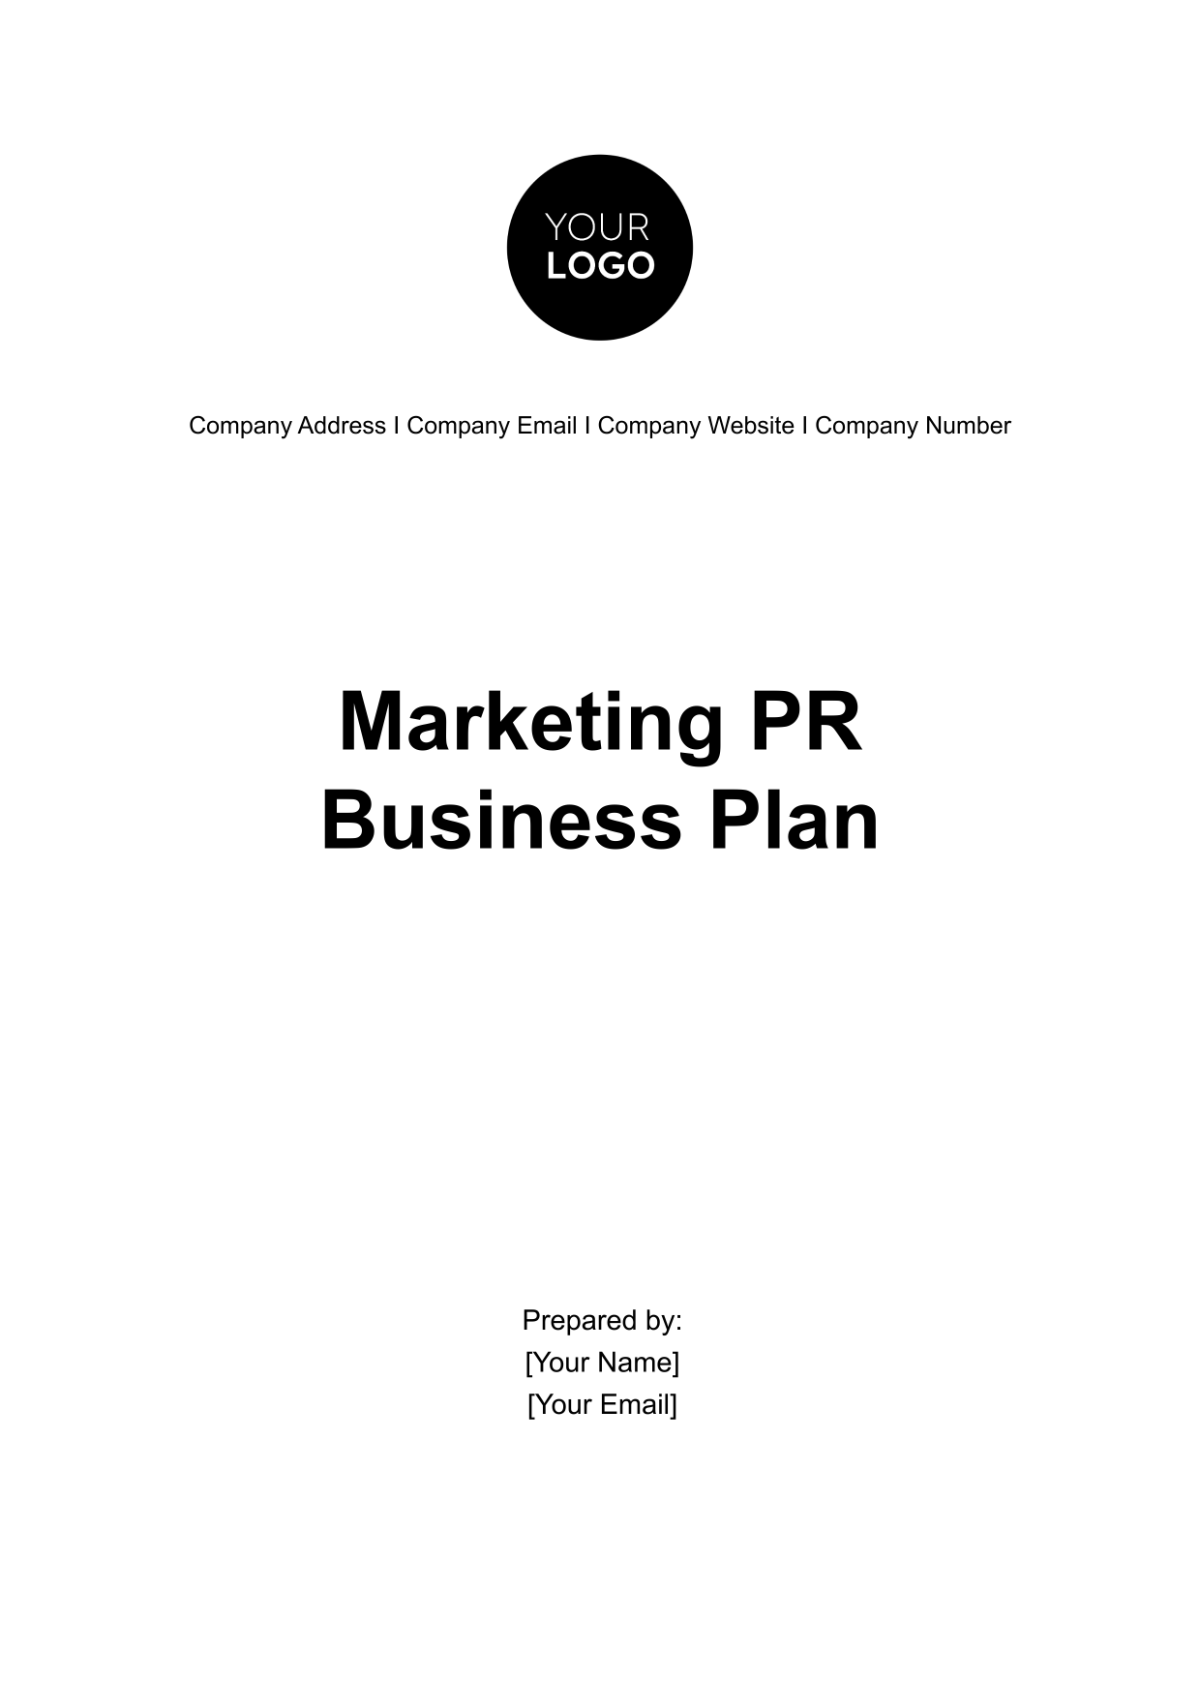 Free Marketing PR Business Plan Template